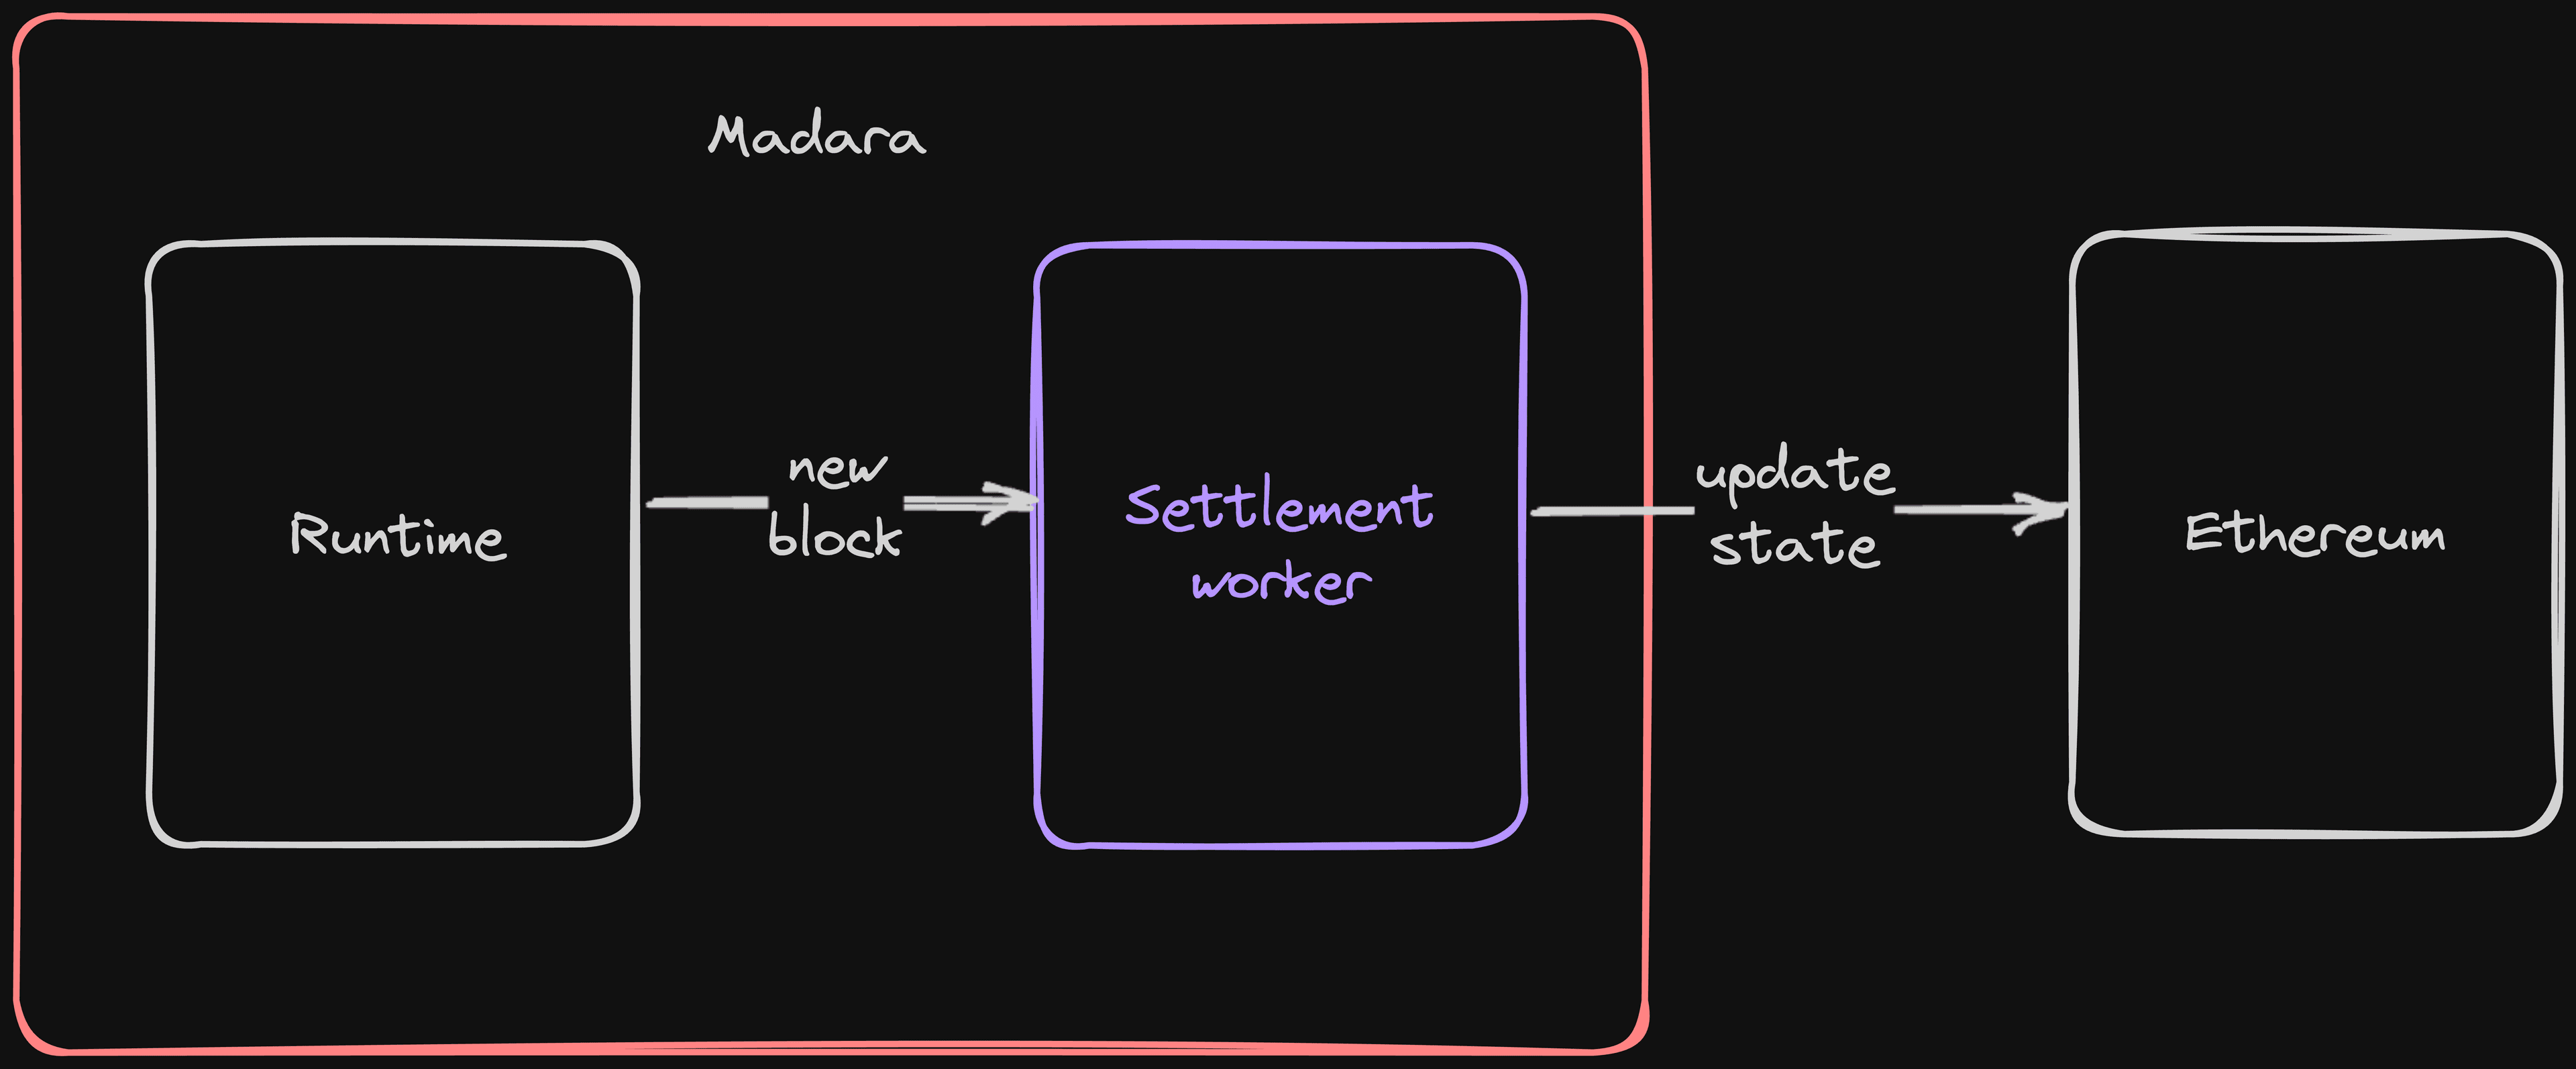 settlement_worker